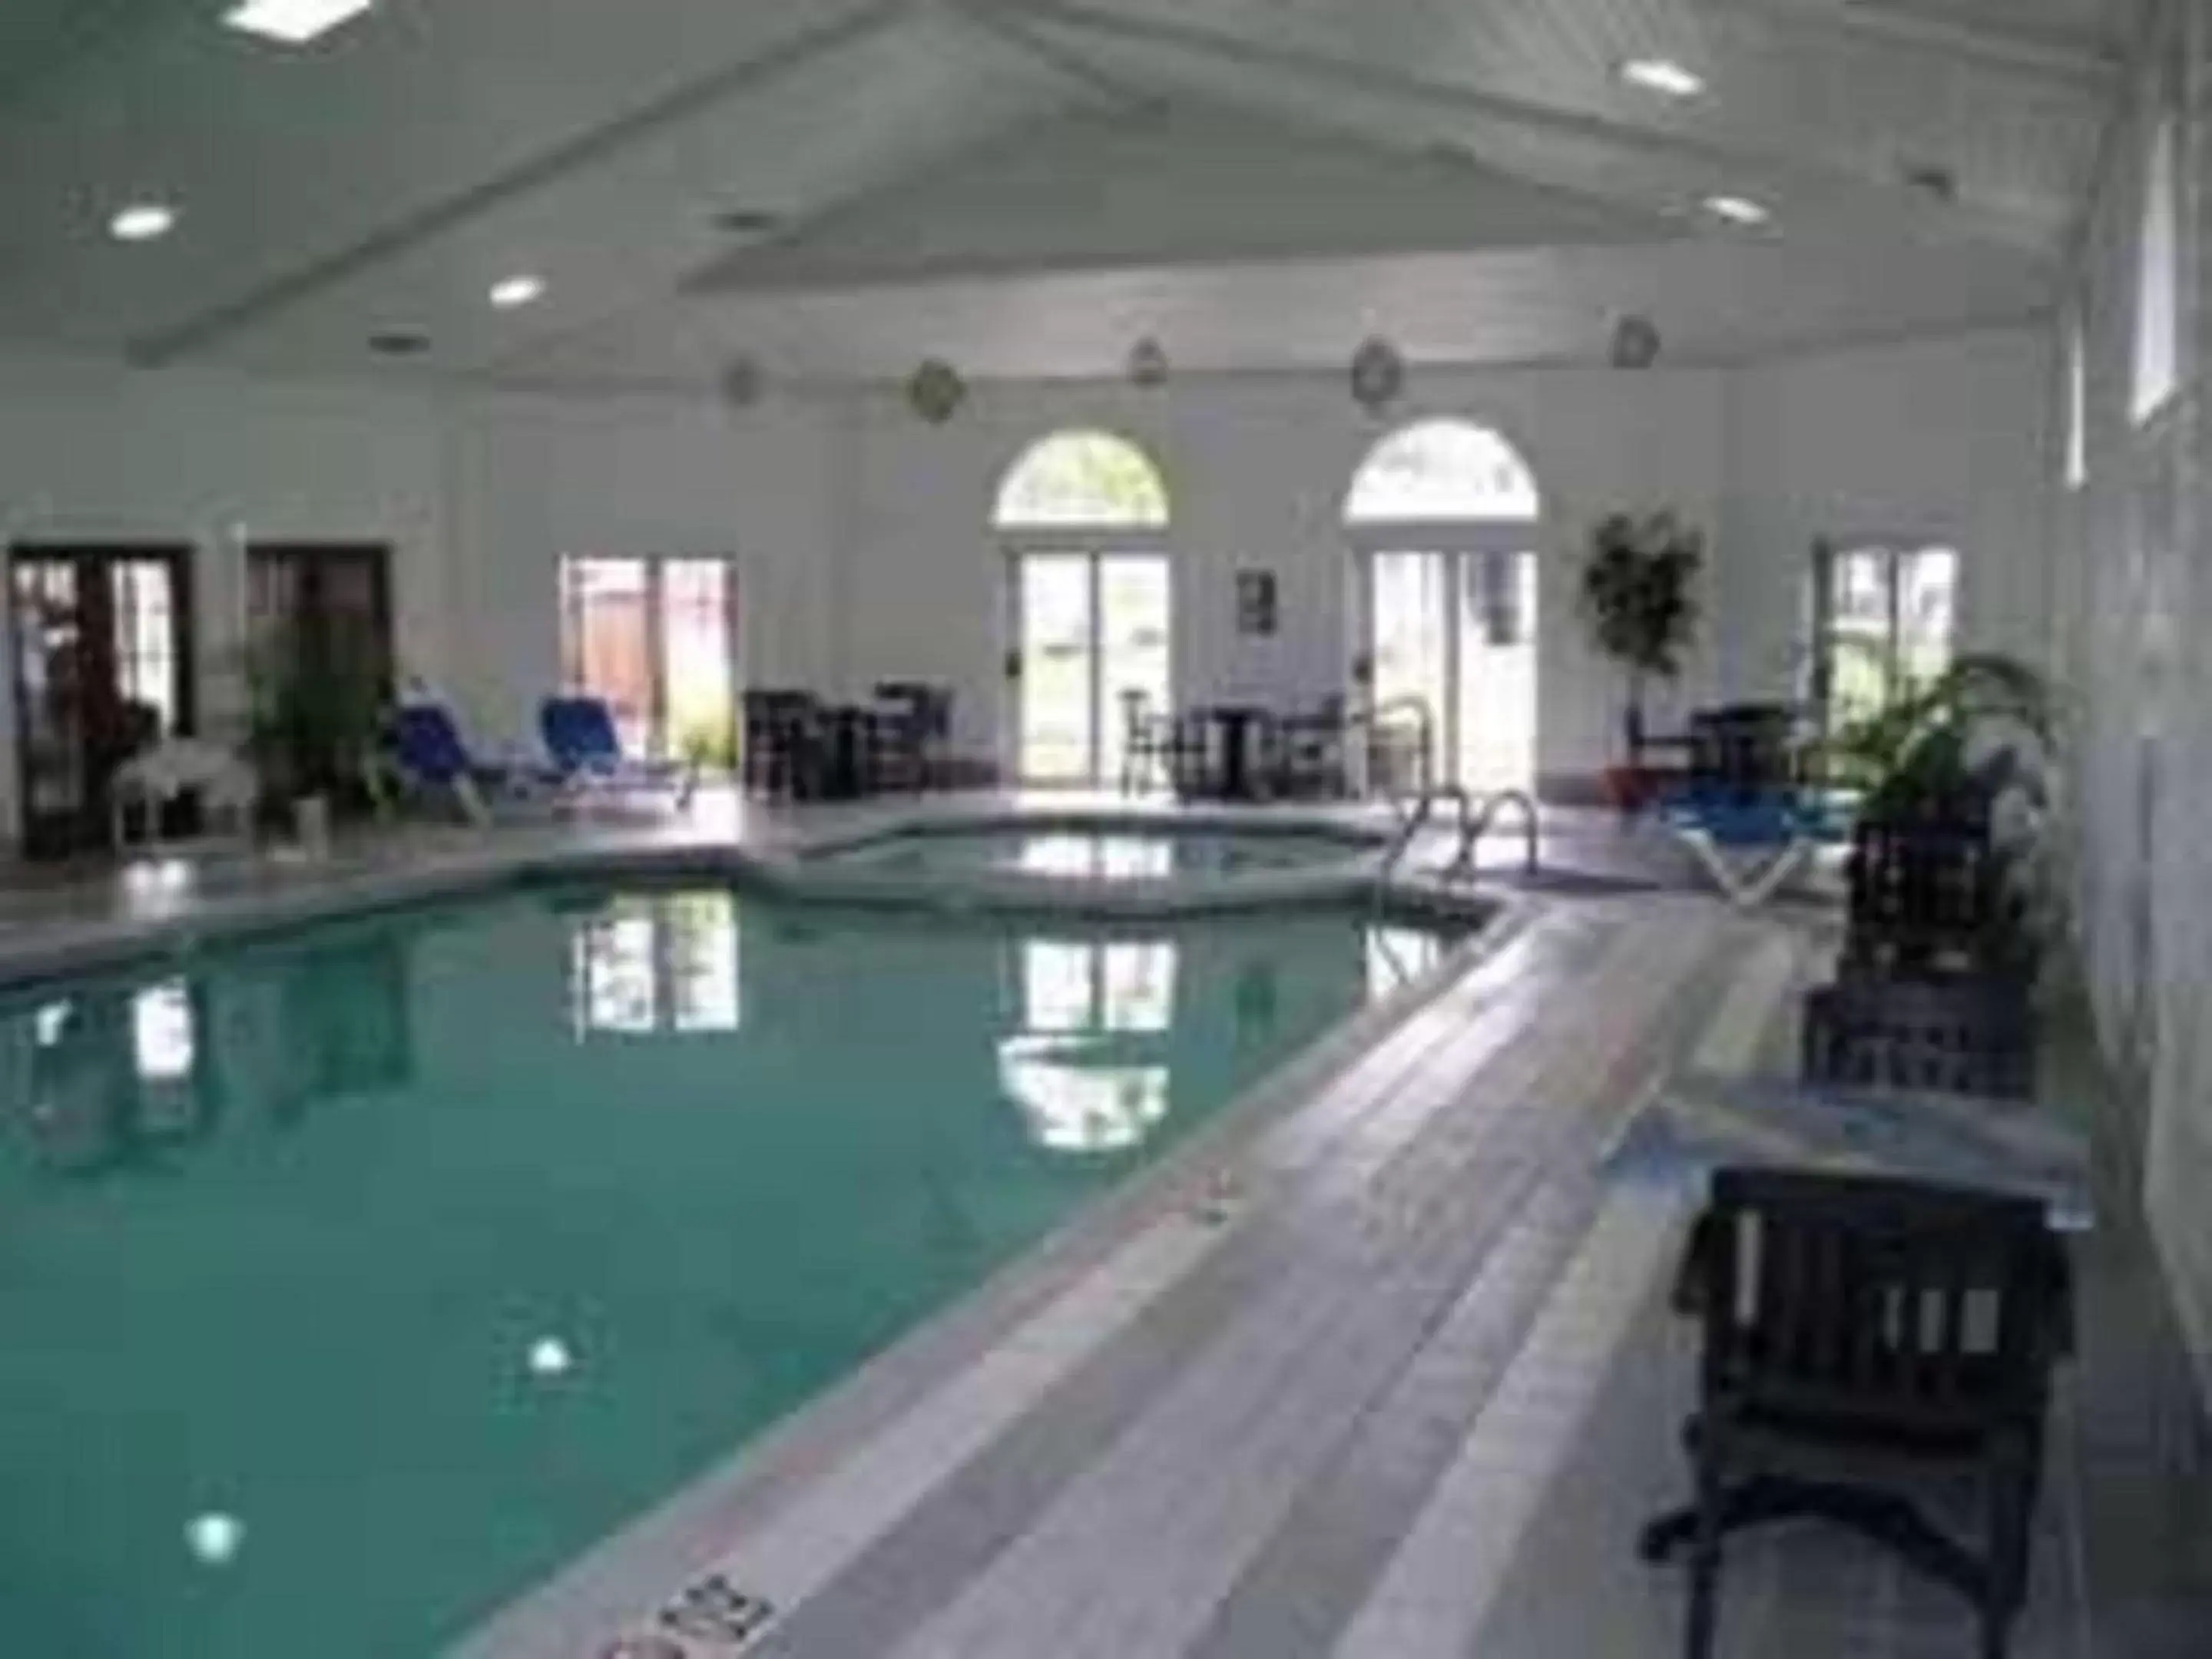 On site, Swimming Pool in Comfort Inn Lakeside - Mackinaw City